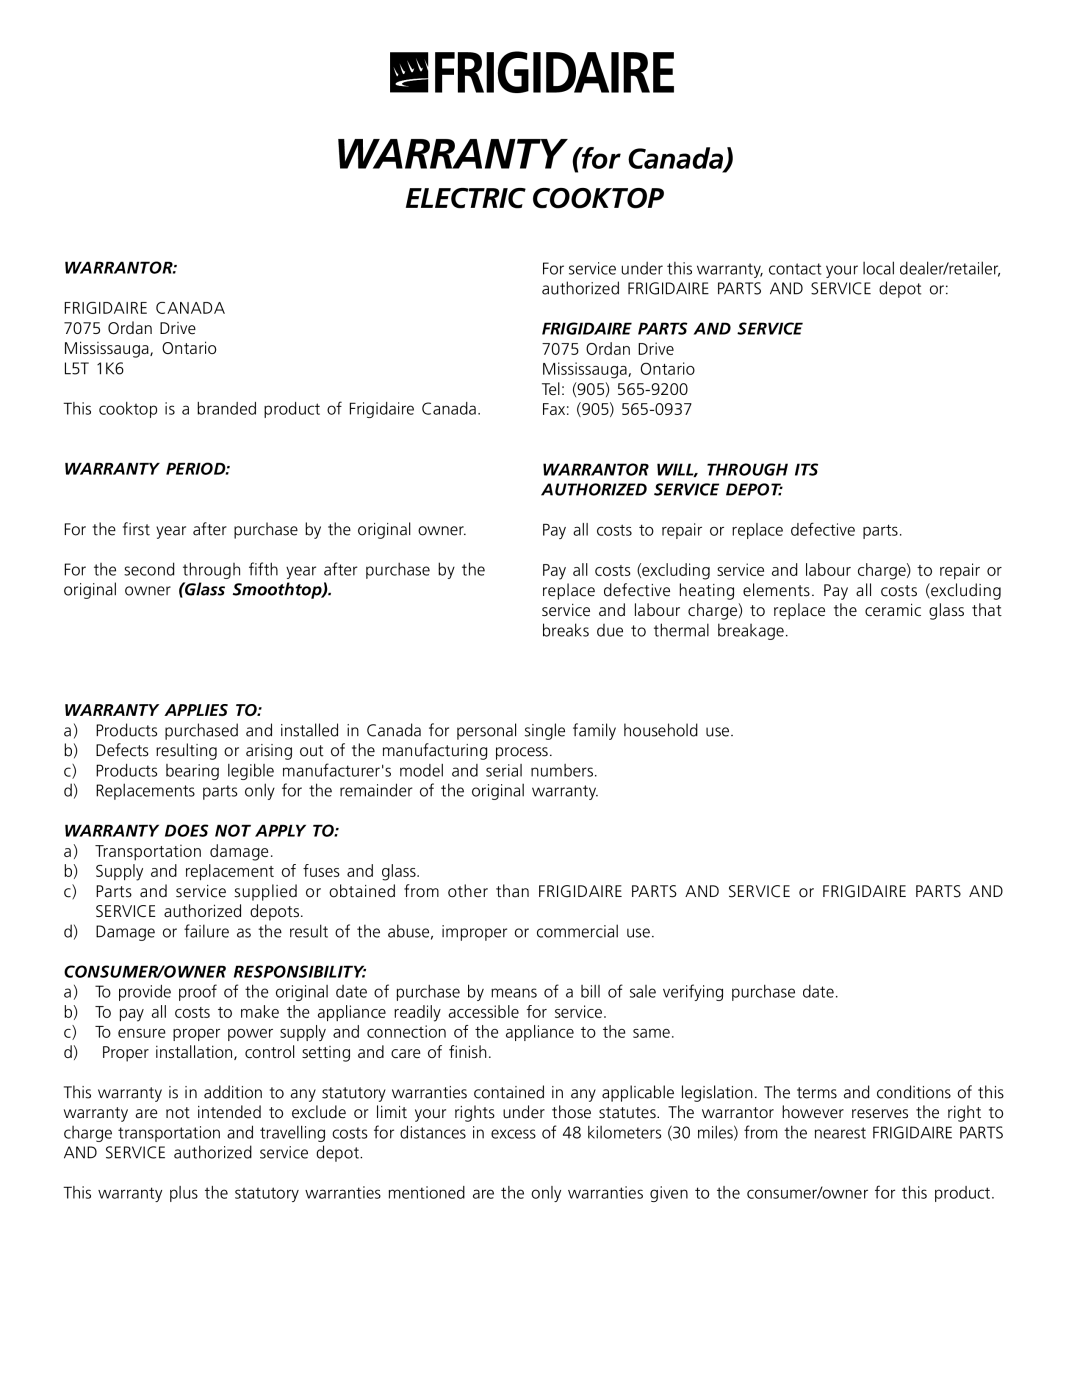 Frigidaire 318200603 WARRANTY for Canada ELECTRIC COOKTOP, Warrantor, Warranty Period, Frigidaire Parts And Service 